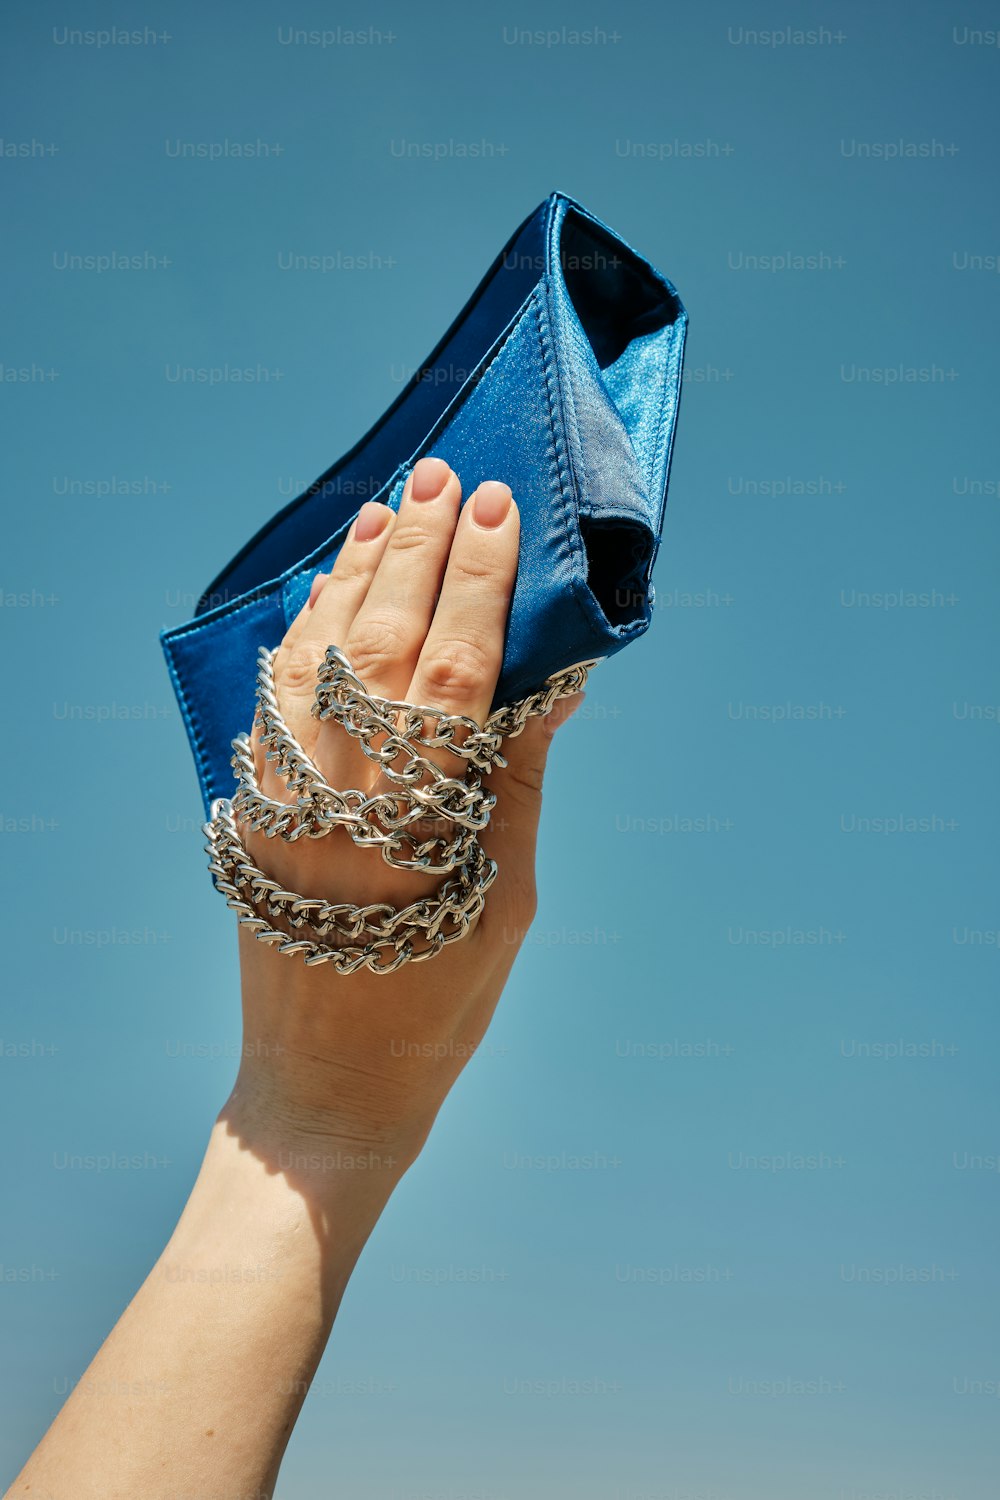 la main d’une femme tenant un sac à main bleu